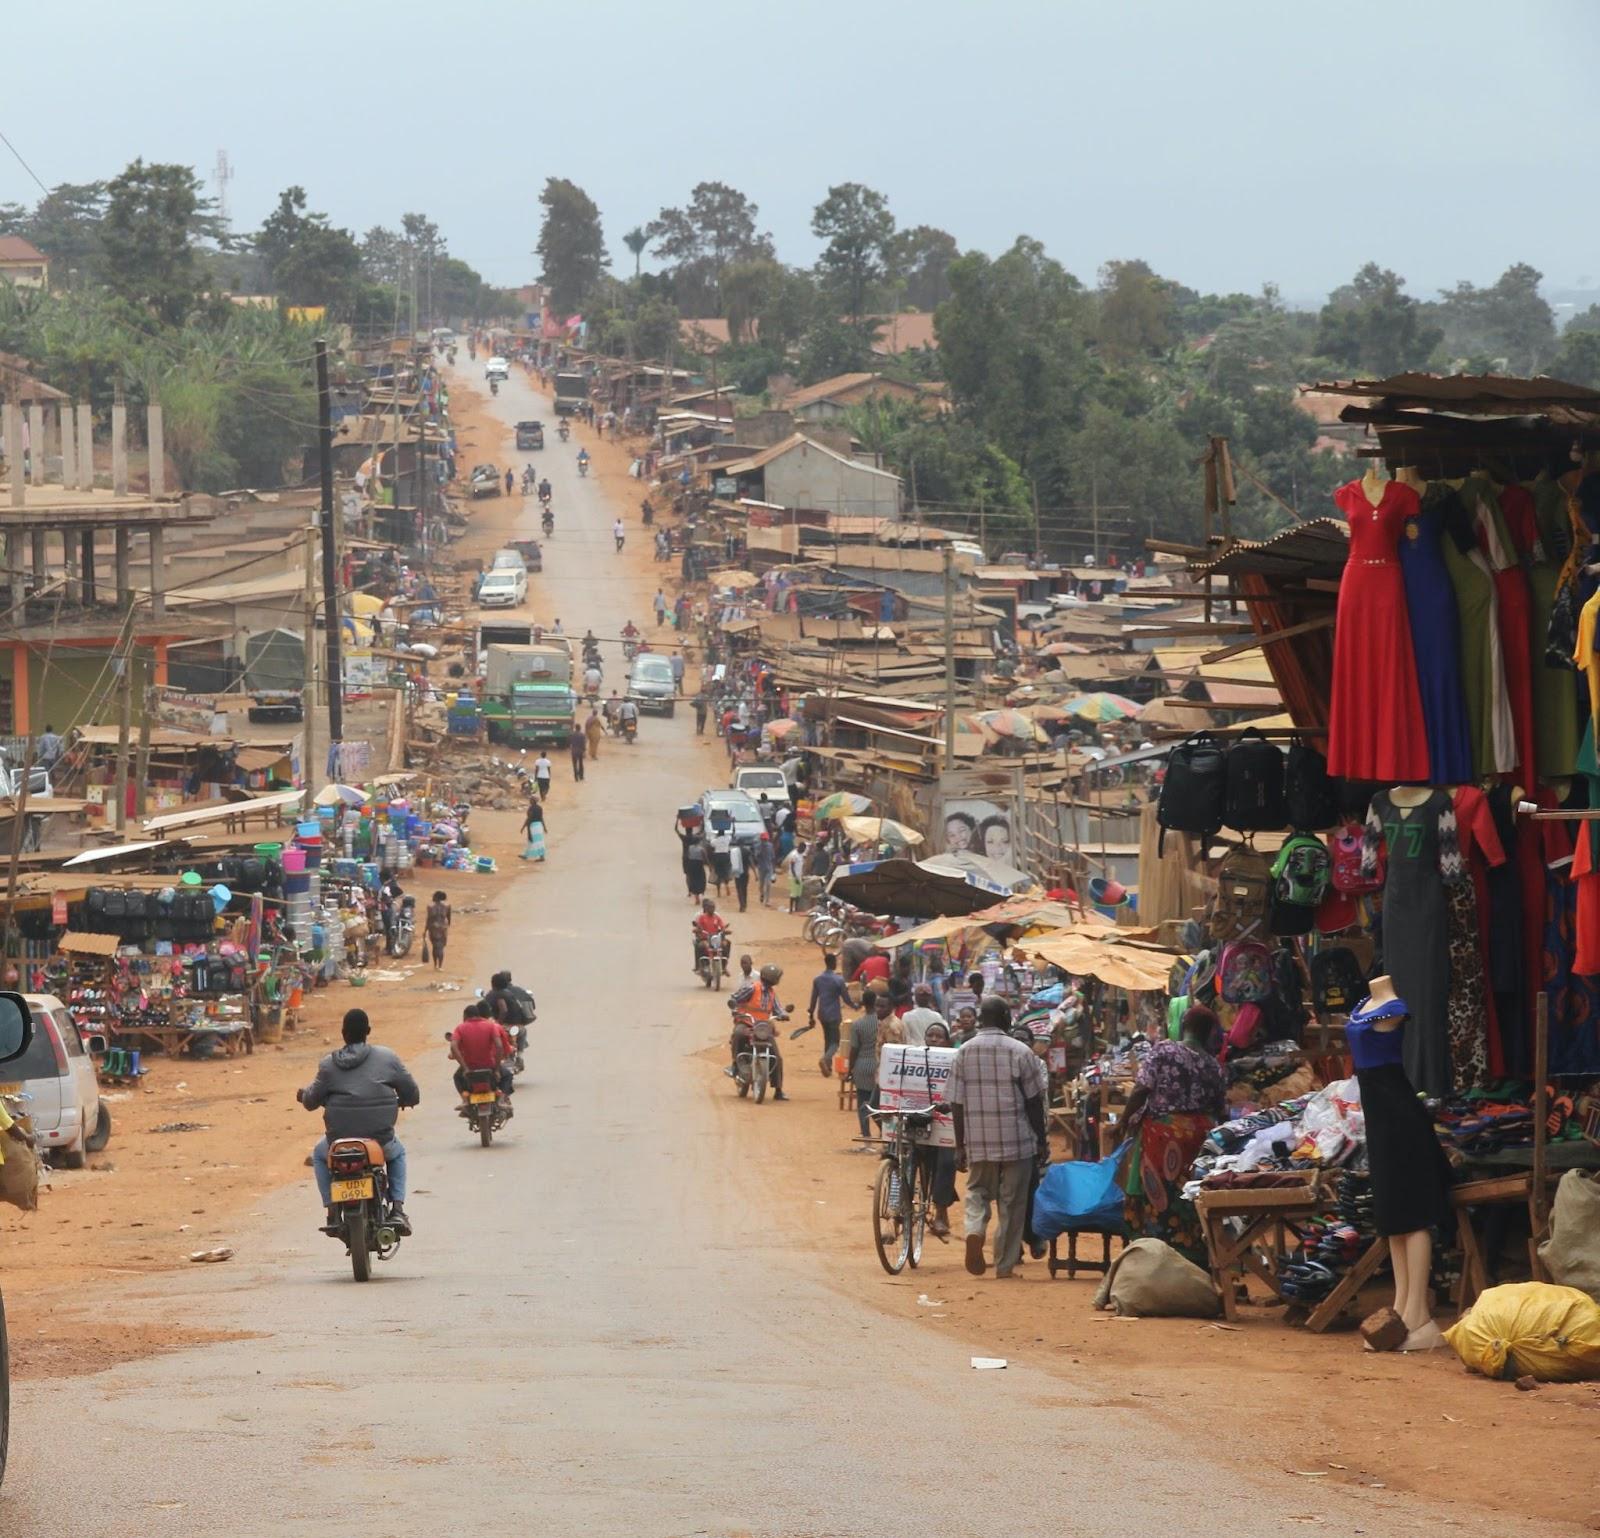 A busy market road in Uganda.